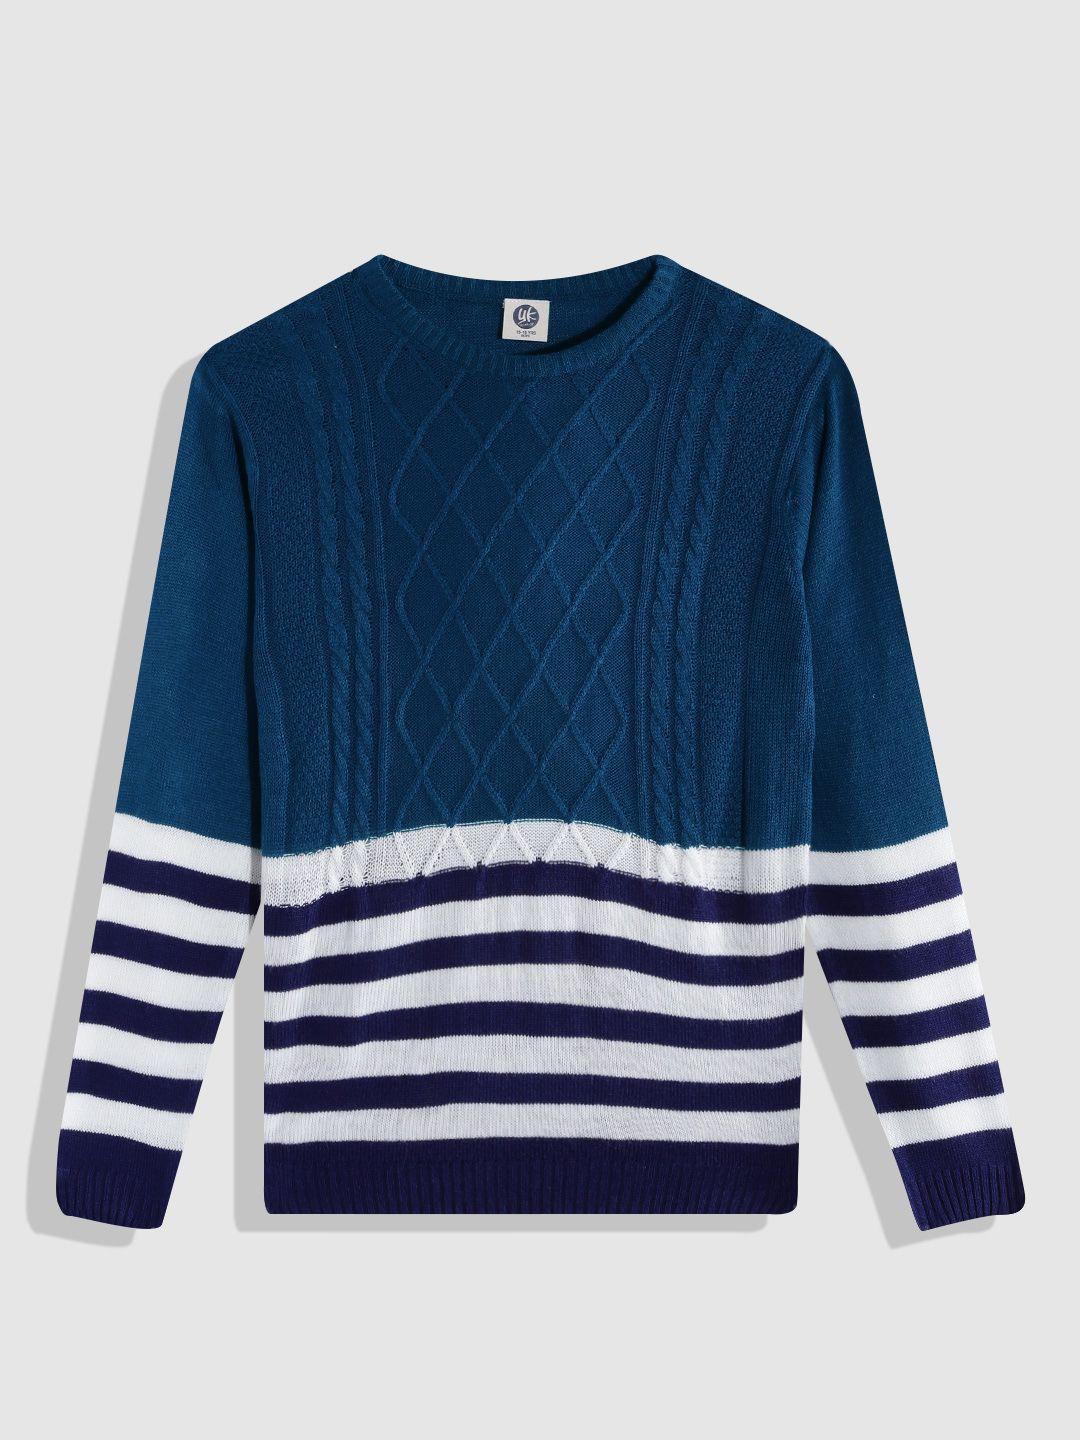 yk-boys-blue-&-white-striped-sweater